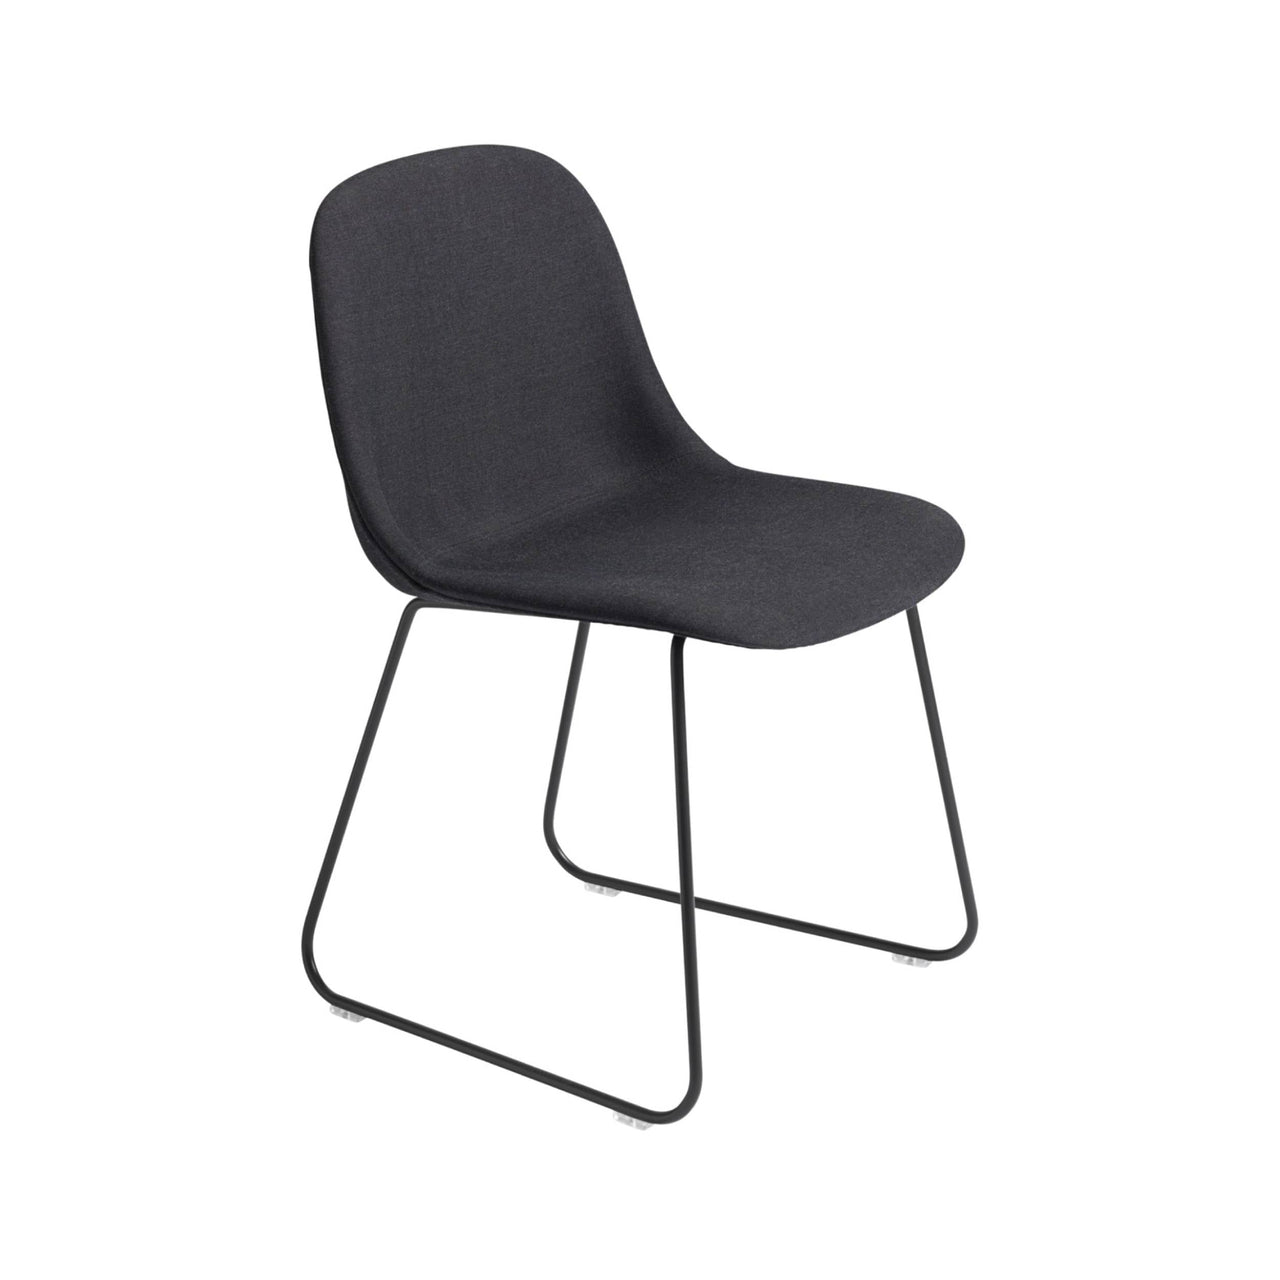 Fiber Side Chair: Sled Base + Recycled Shell + Upholstered + Anthracite Black